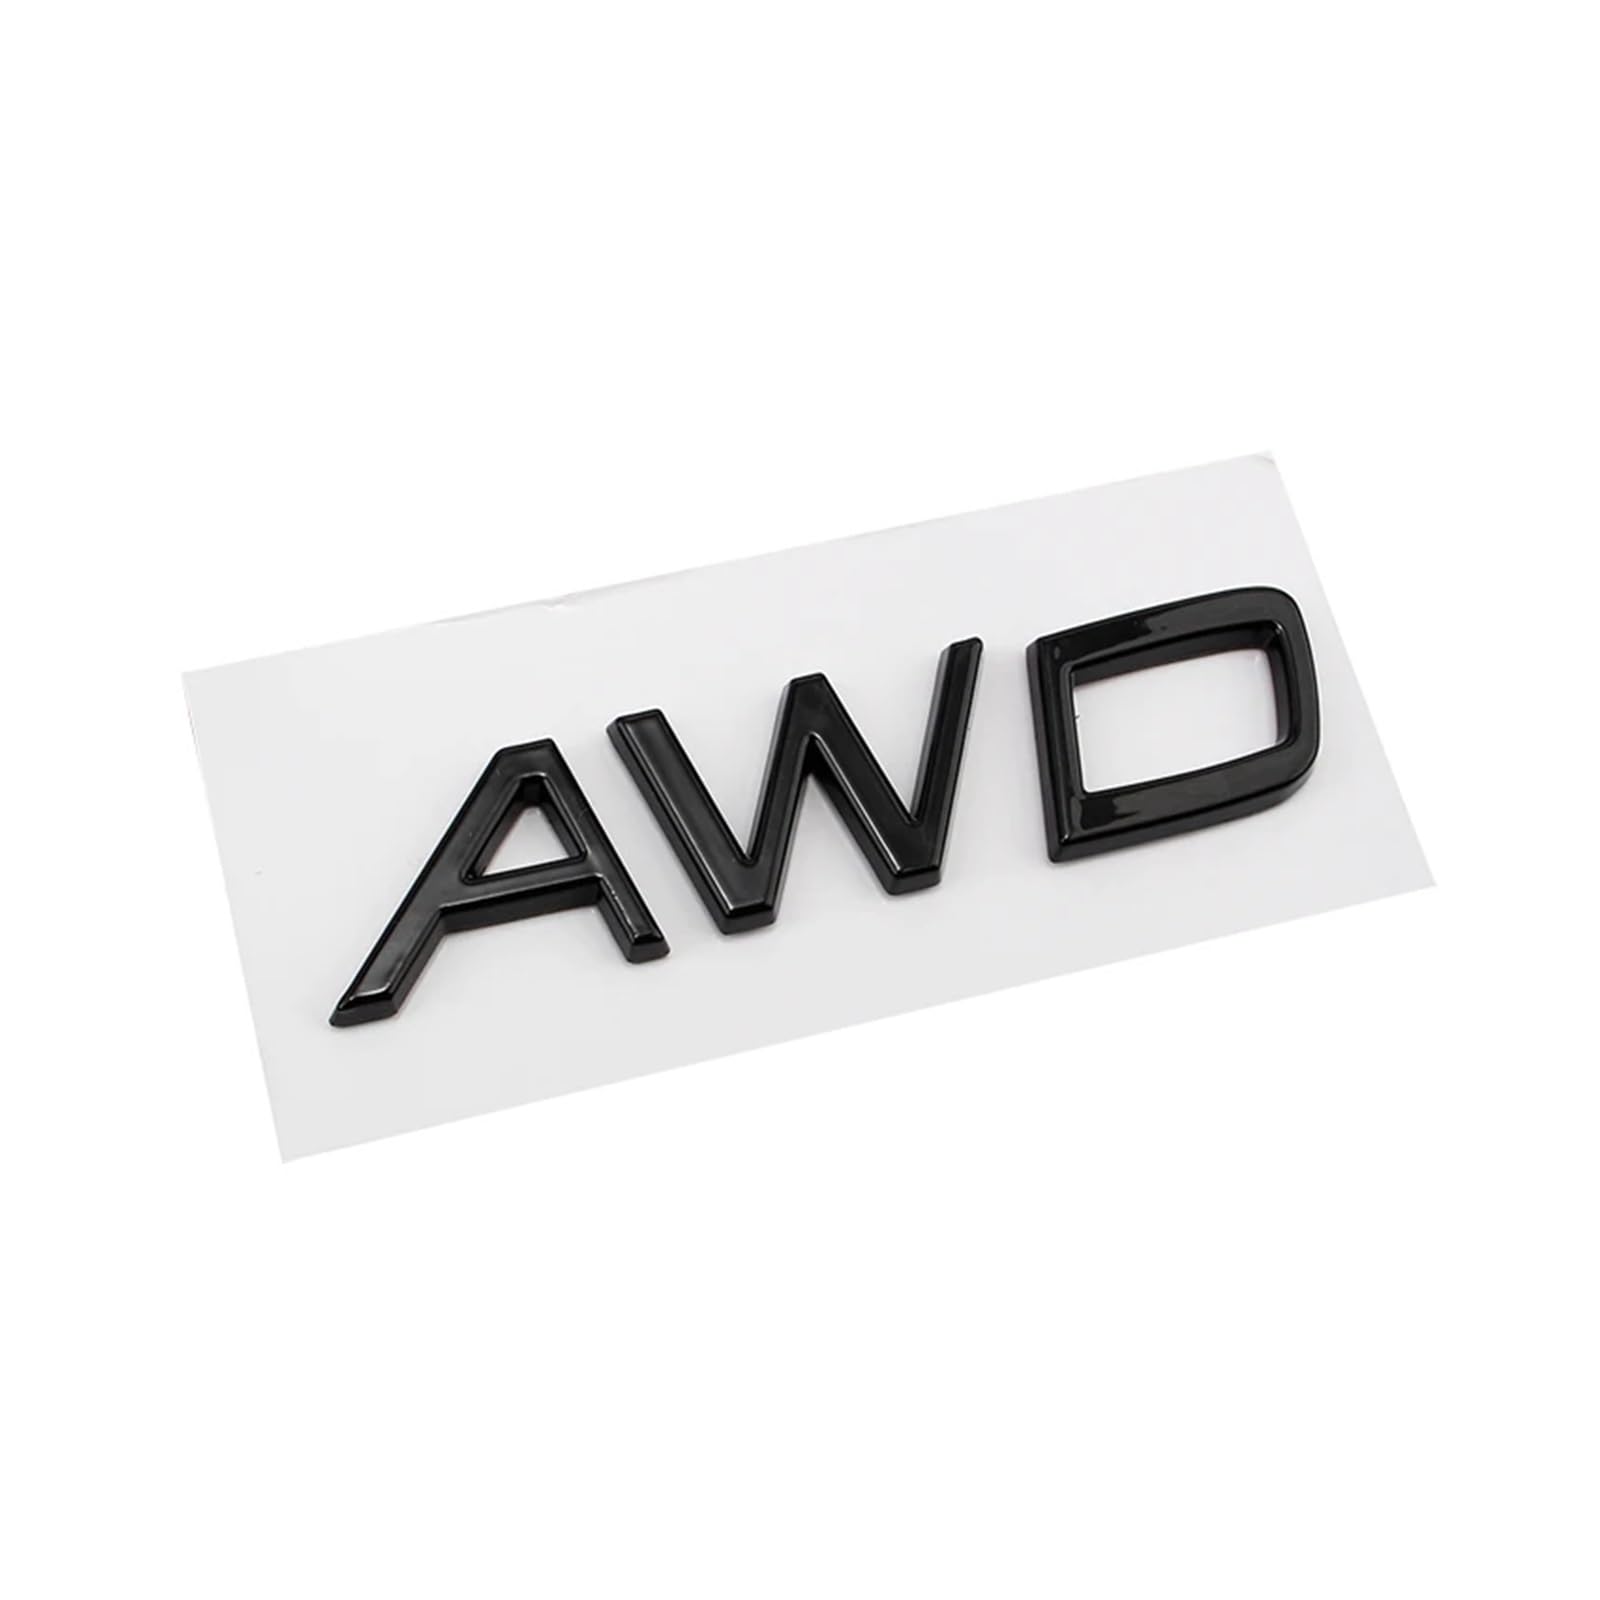 AQXYWQOL Auto ABS Verschiebung Logo Ersetzen Abzeichen Emblem Aufkleber Aufkleber Kompatibel mit S60 S80 S90 XC90 XC60 V40 V70 V60 T3 T4 T5 T6 T8 V8 AWD Farbe ist konstant, verblasst nicht und beschäd von AQXYWQOL